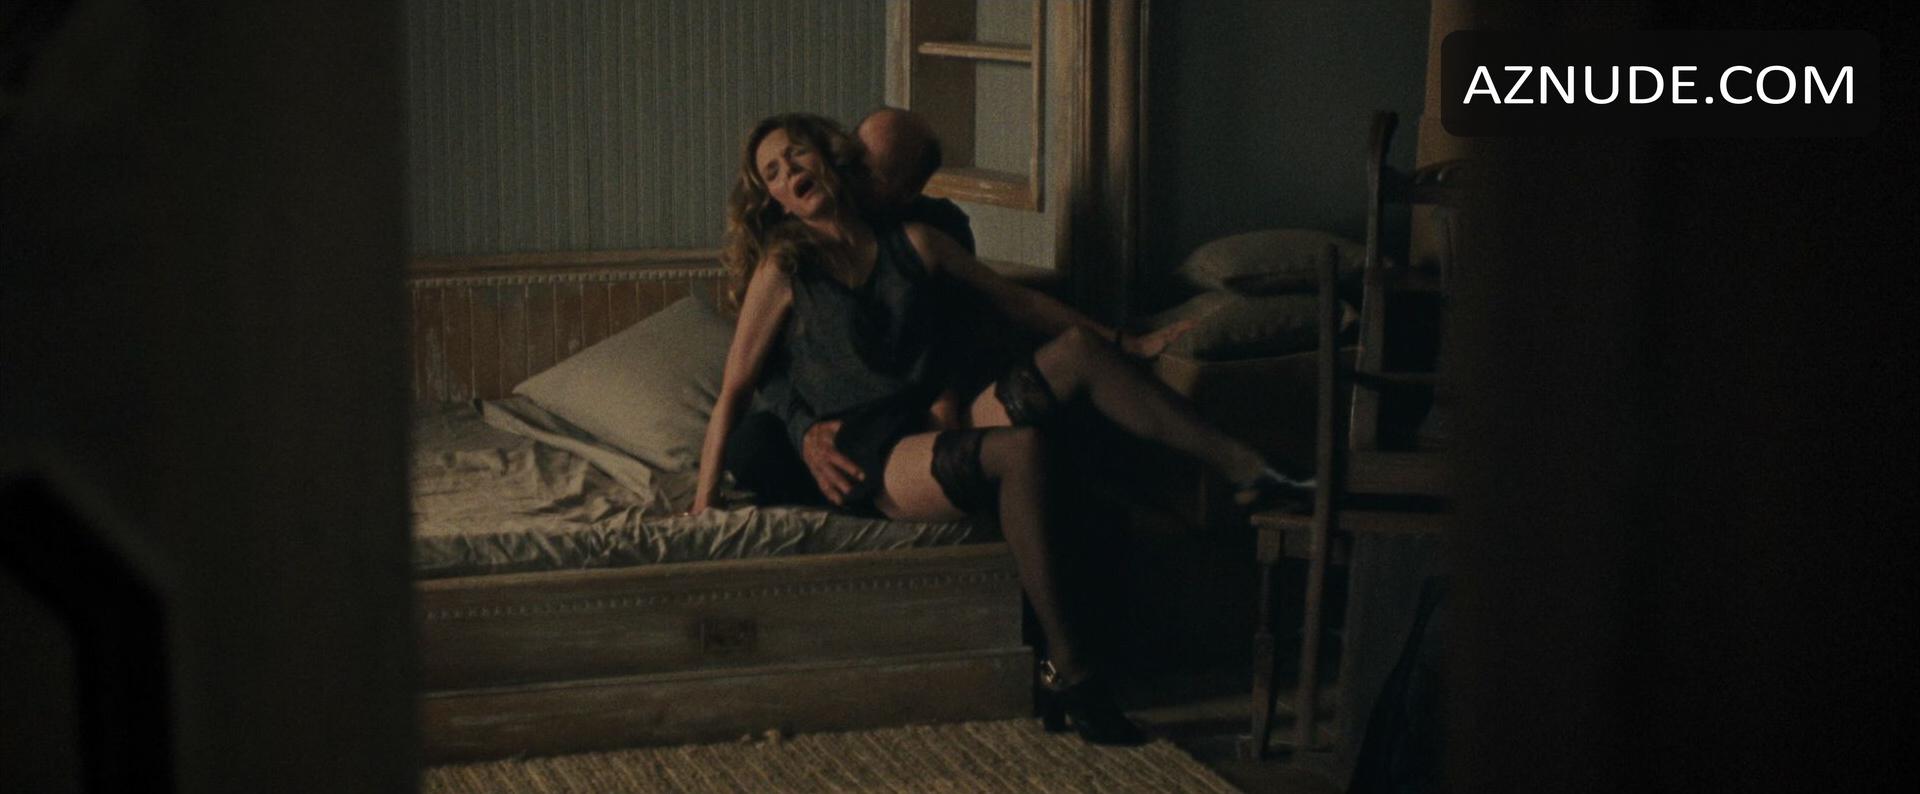 Mother sex scenes in movies